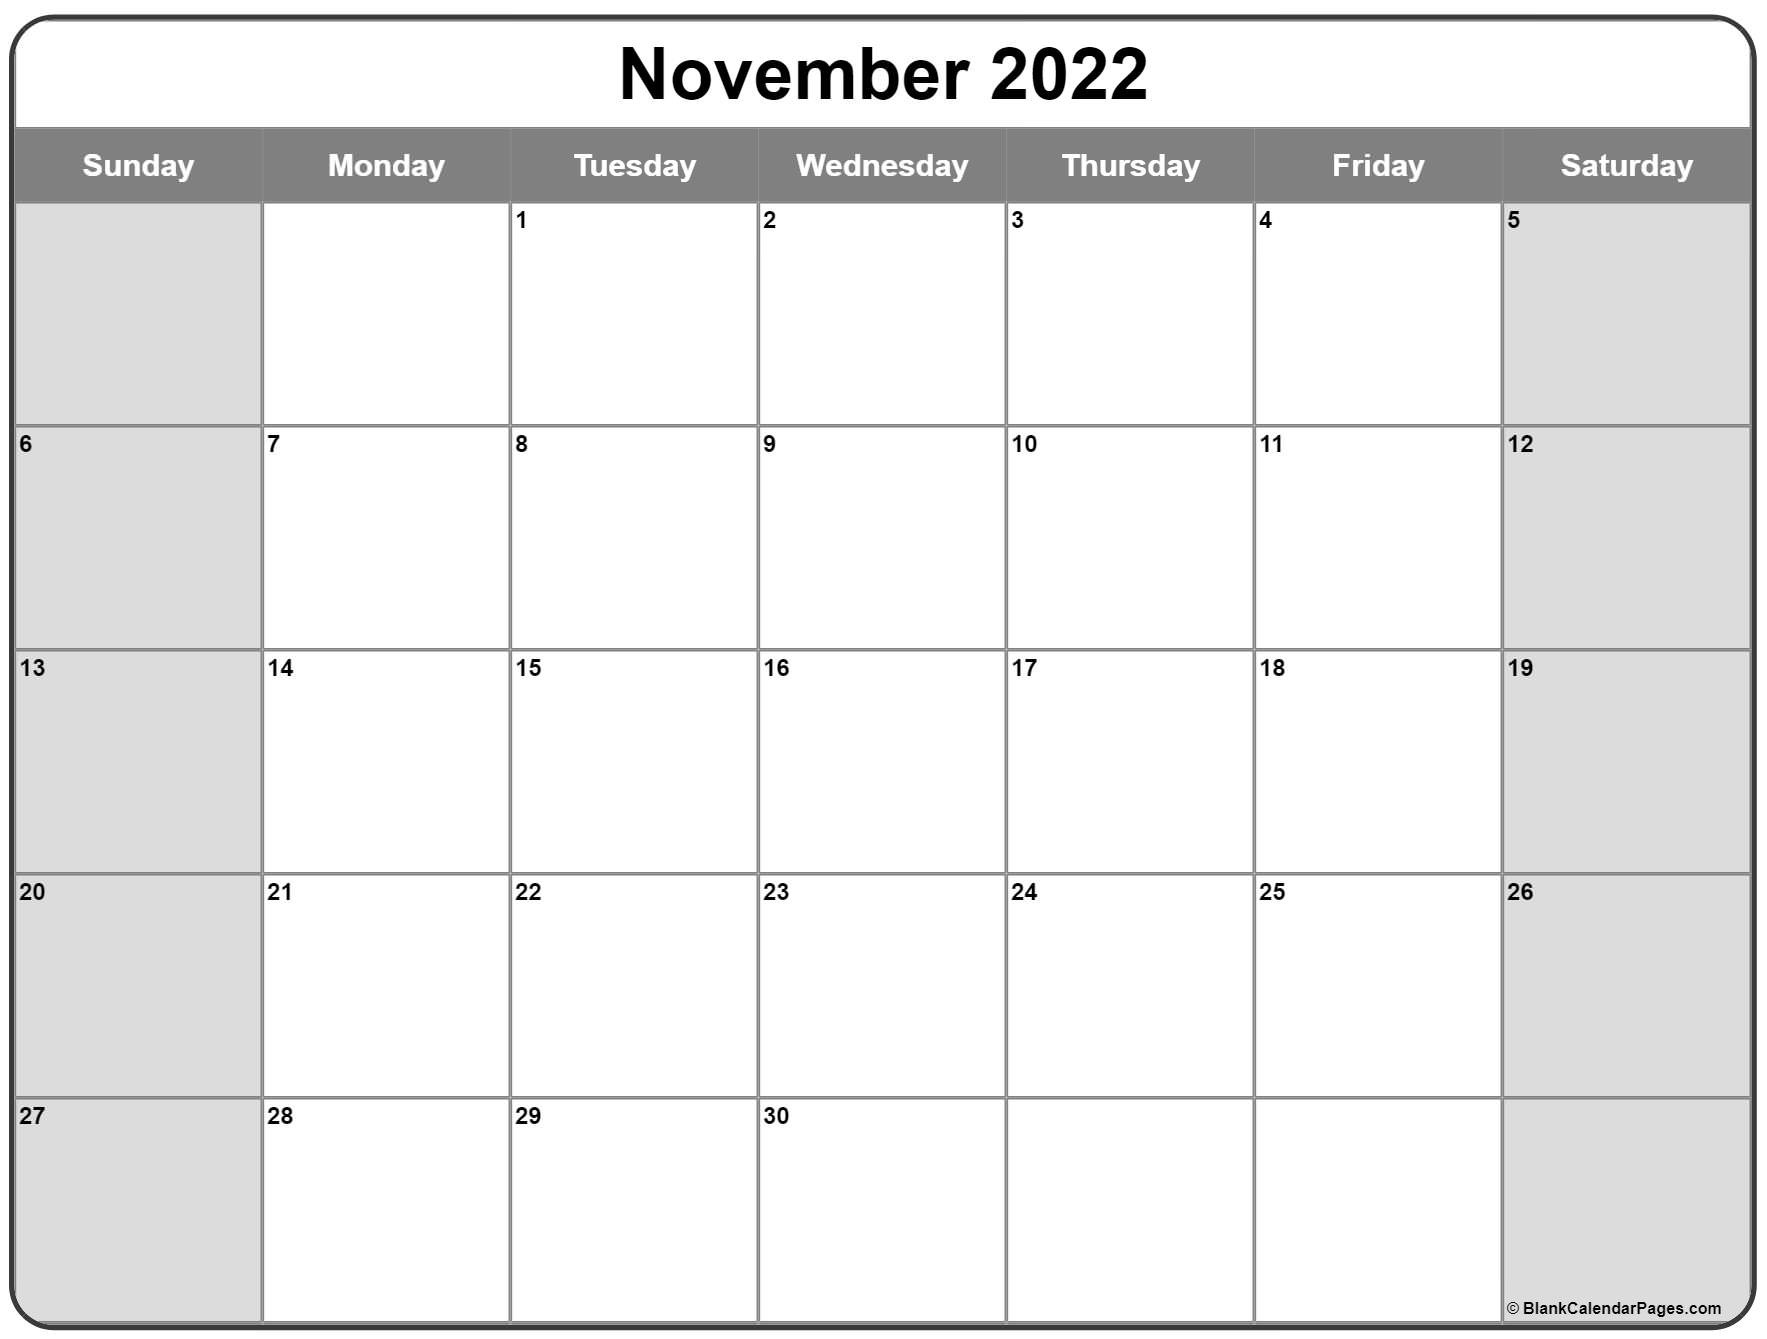 November 2022 Calendar | Free Printable Calendar Templates  November To January 2022 Calendar